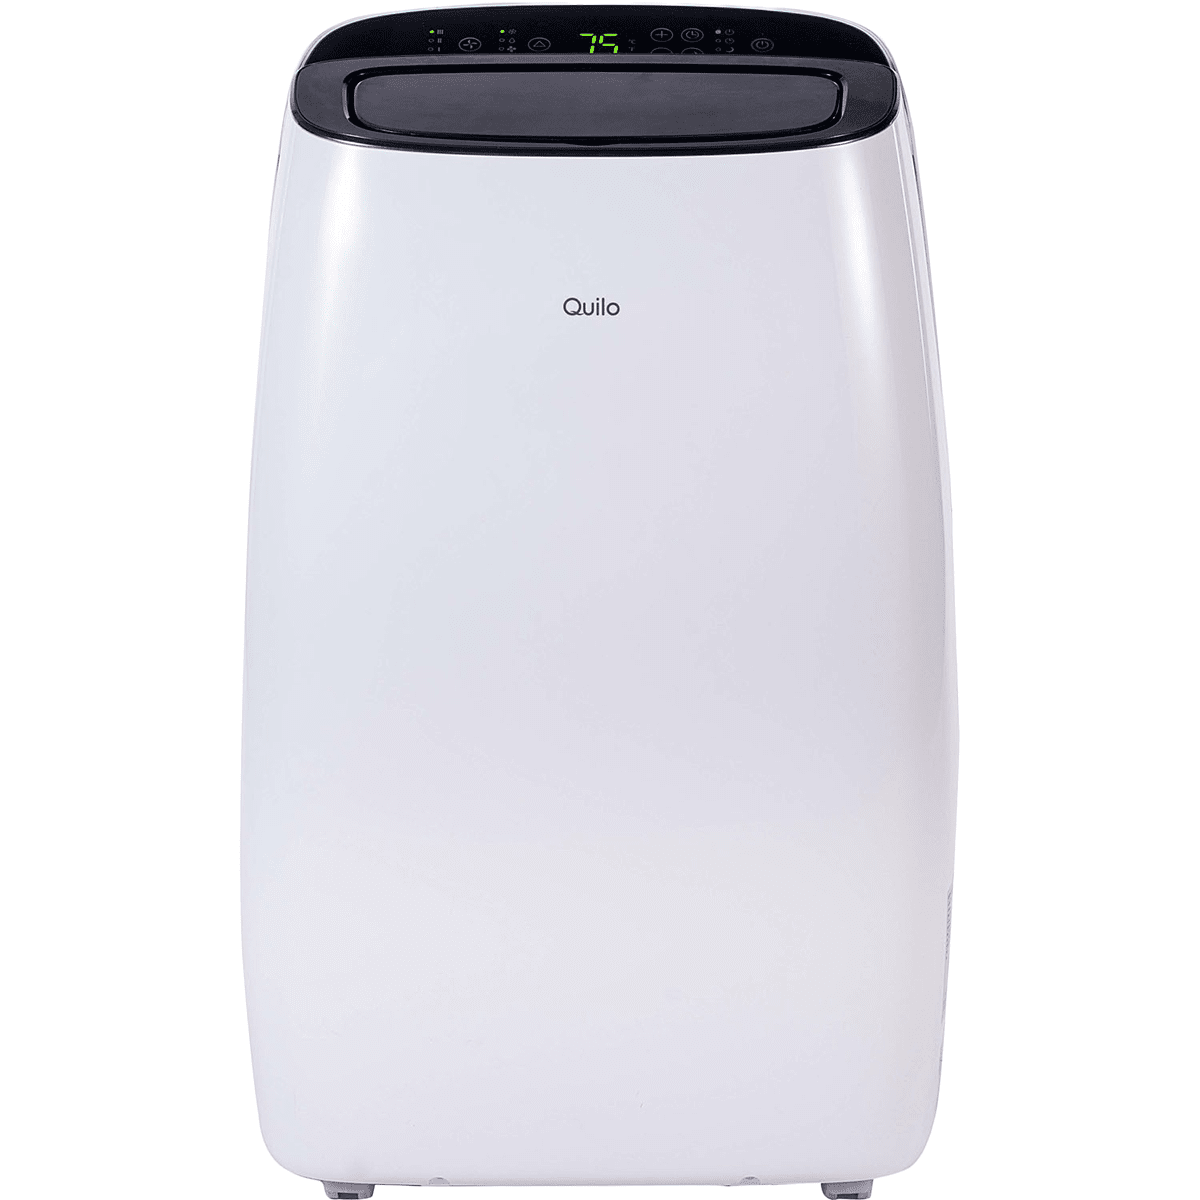 Quilo Qp110wk Portable Air Conditioner